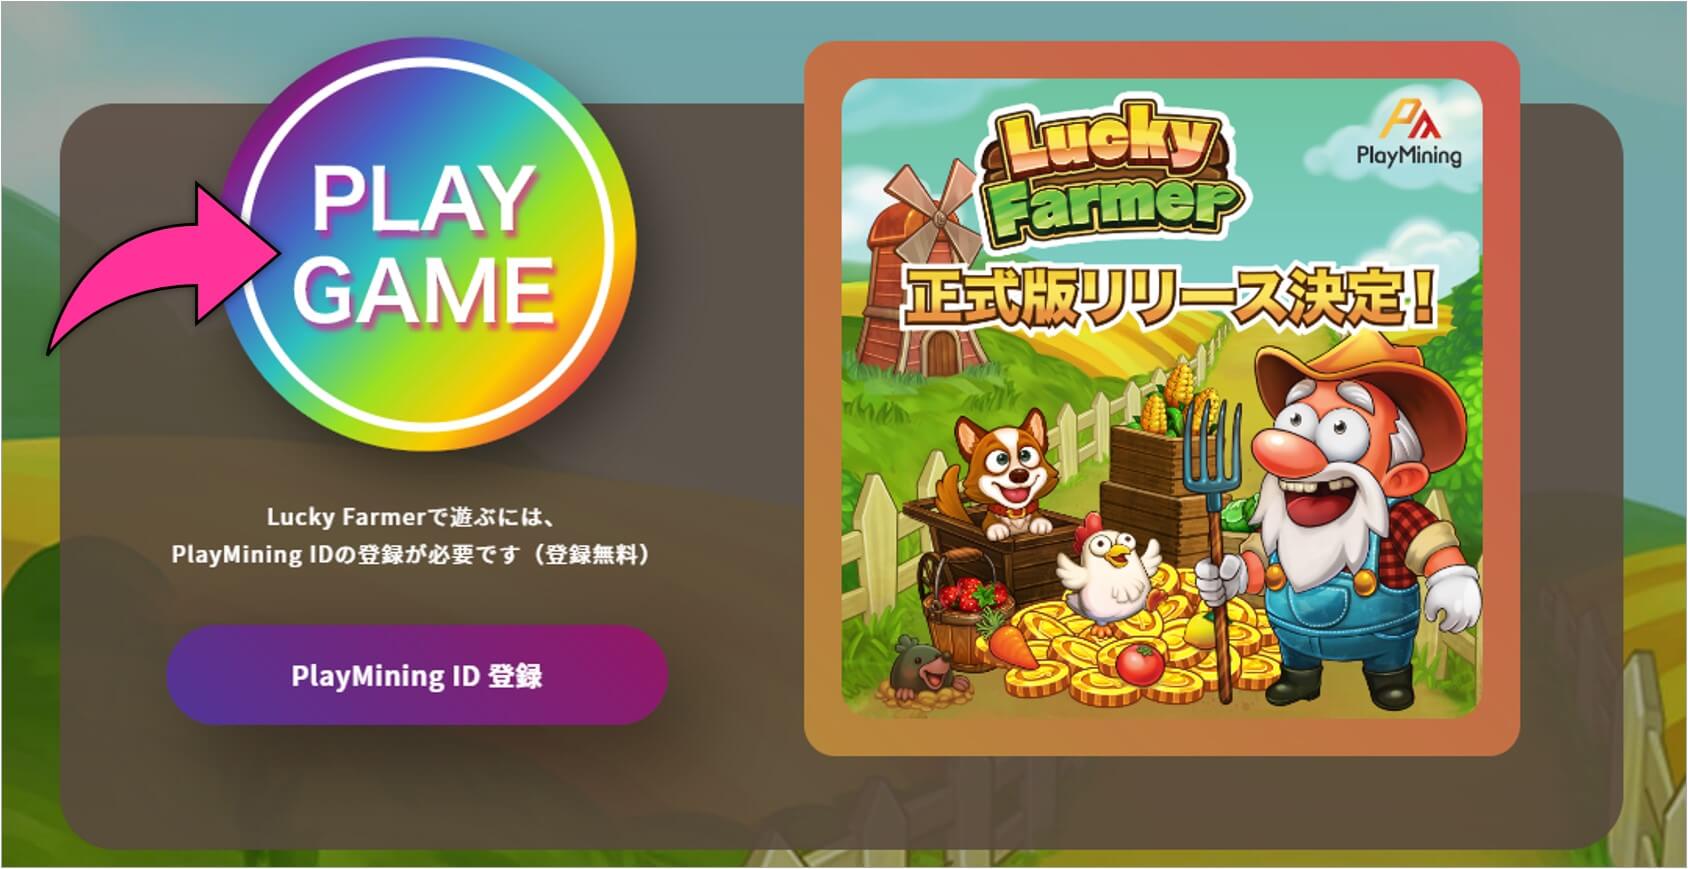 Lucky Farmer公式サイトから「PLAY GAME」を選択